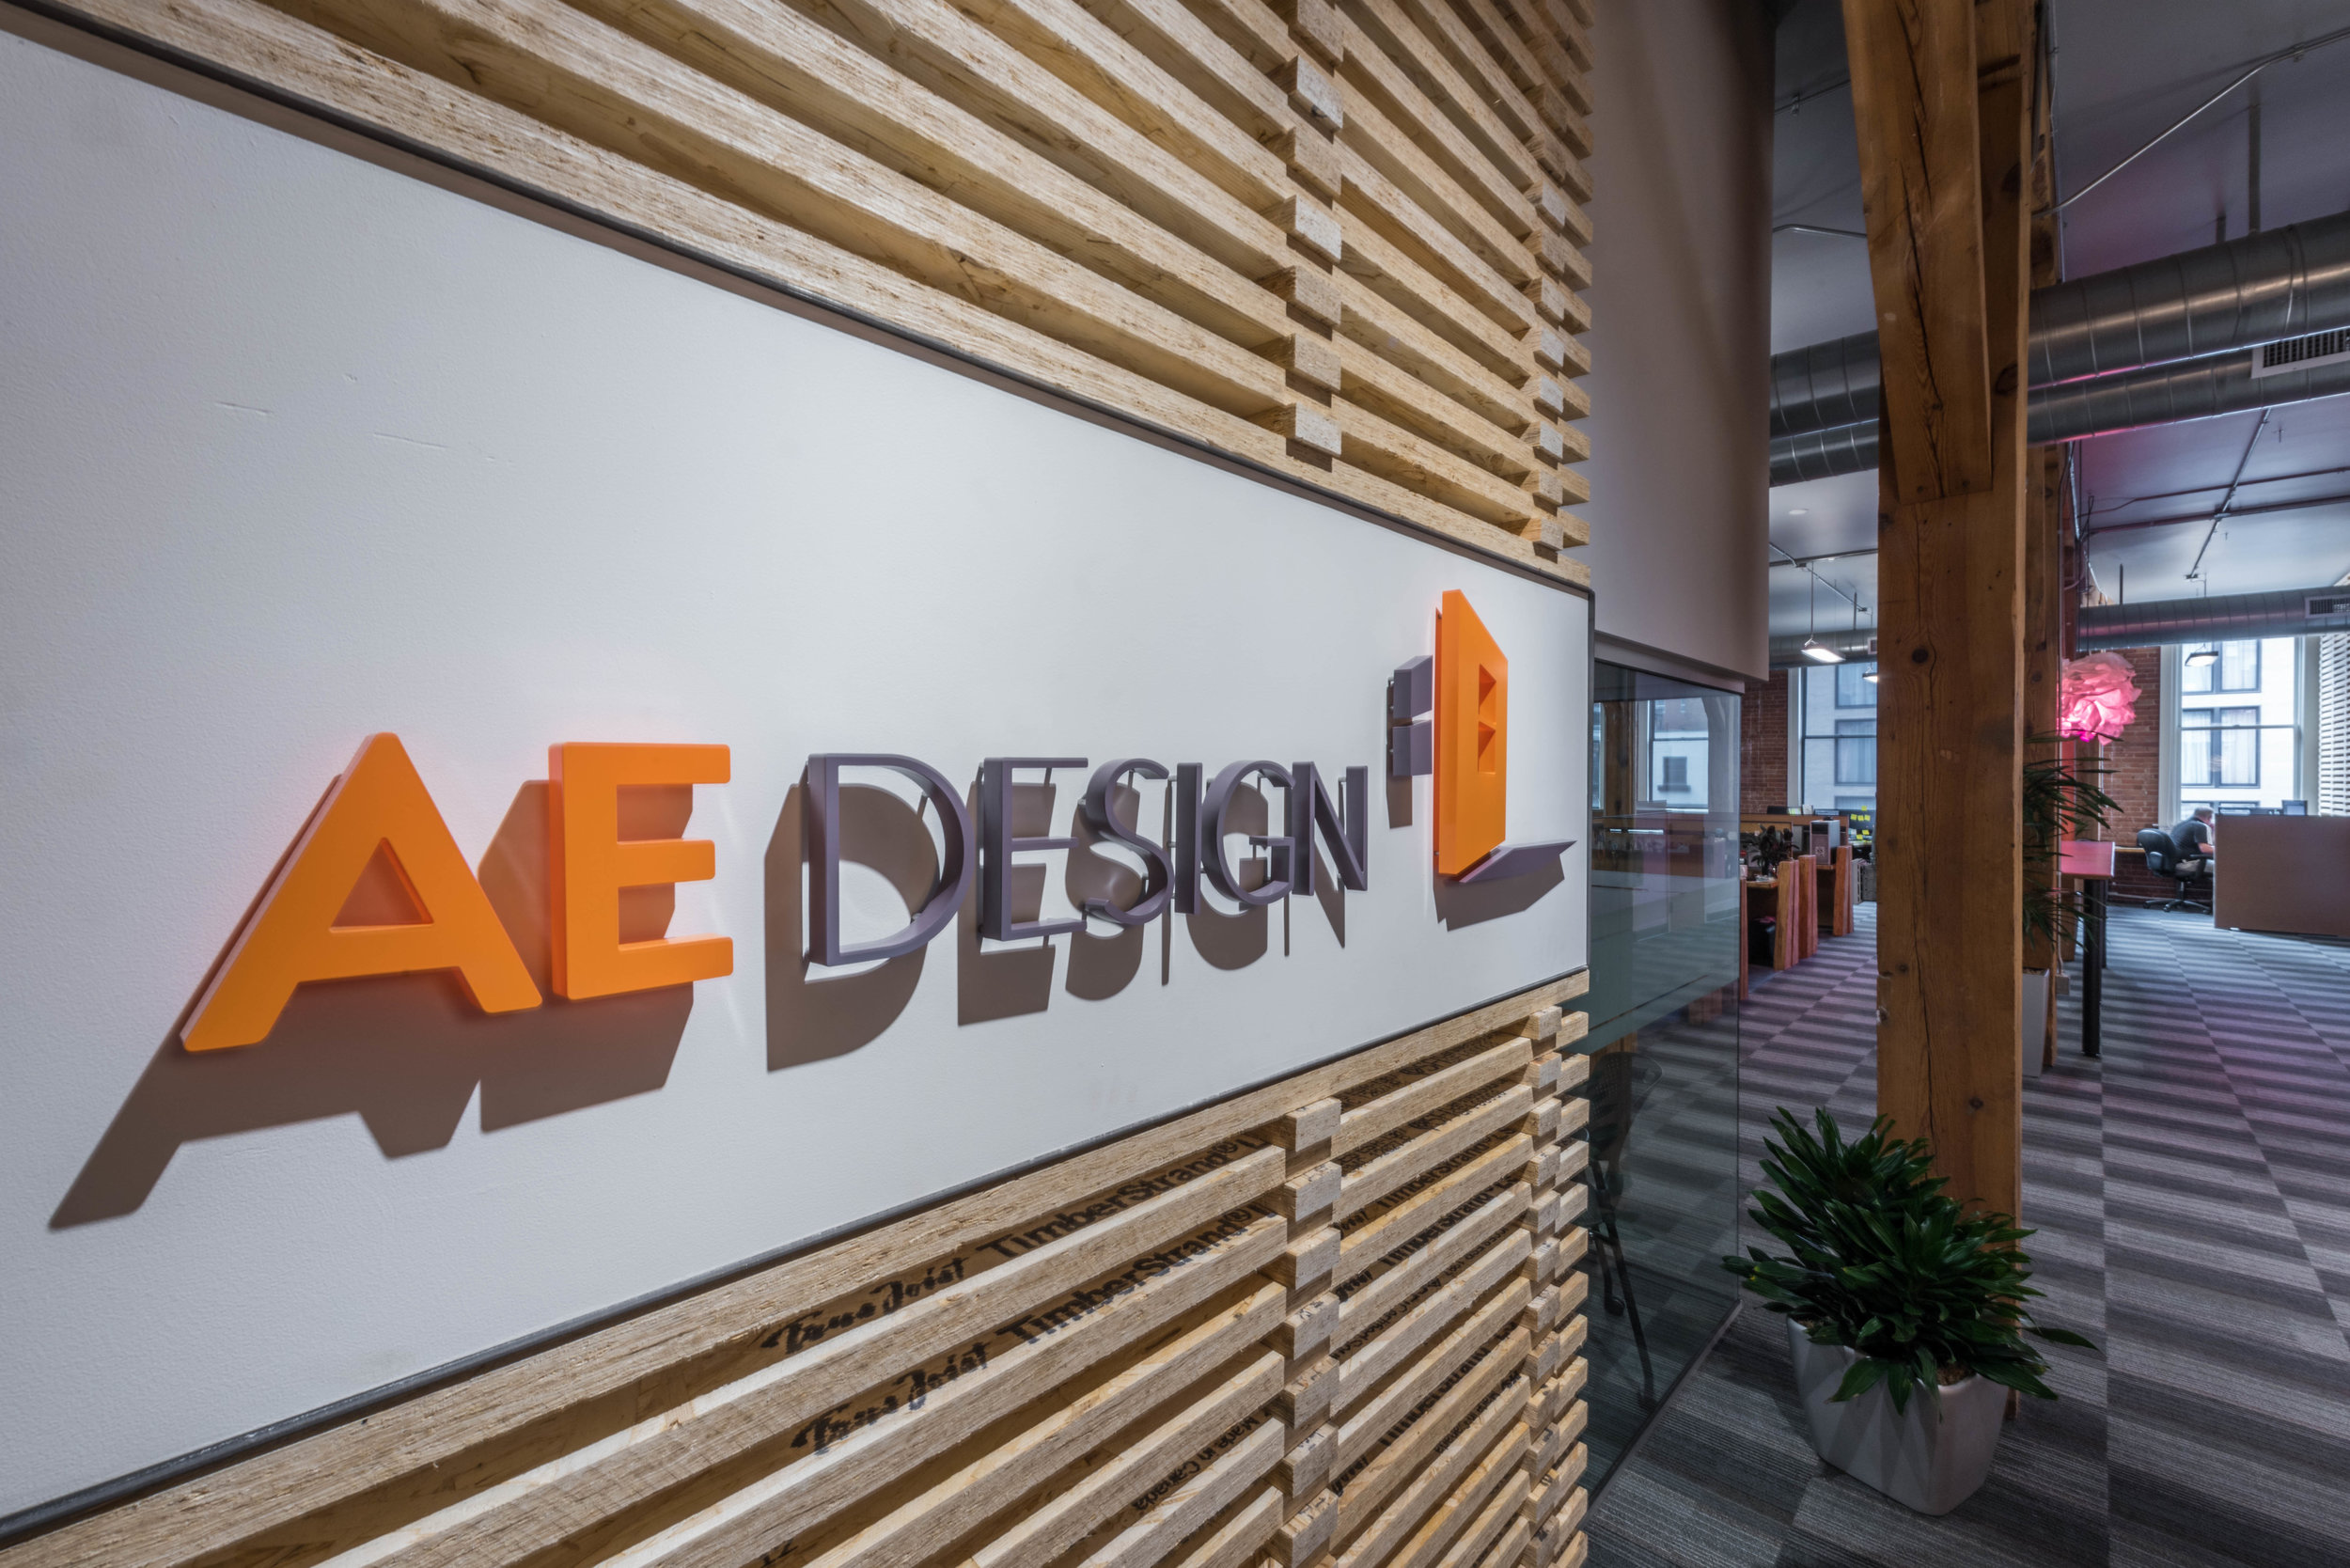 AE Design - Front Desk and Signage (3).jpg